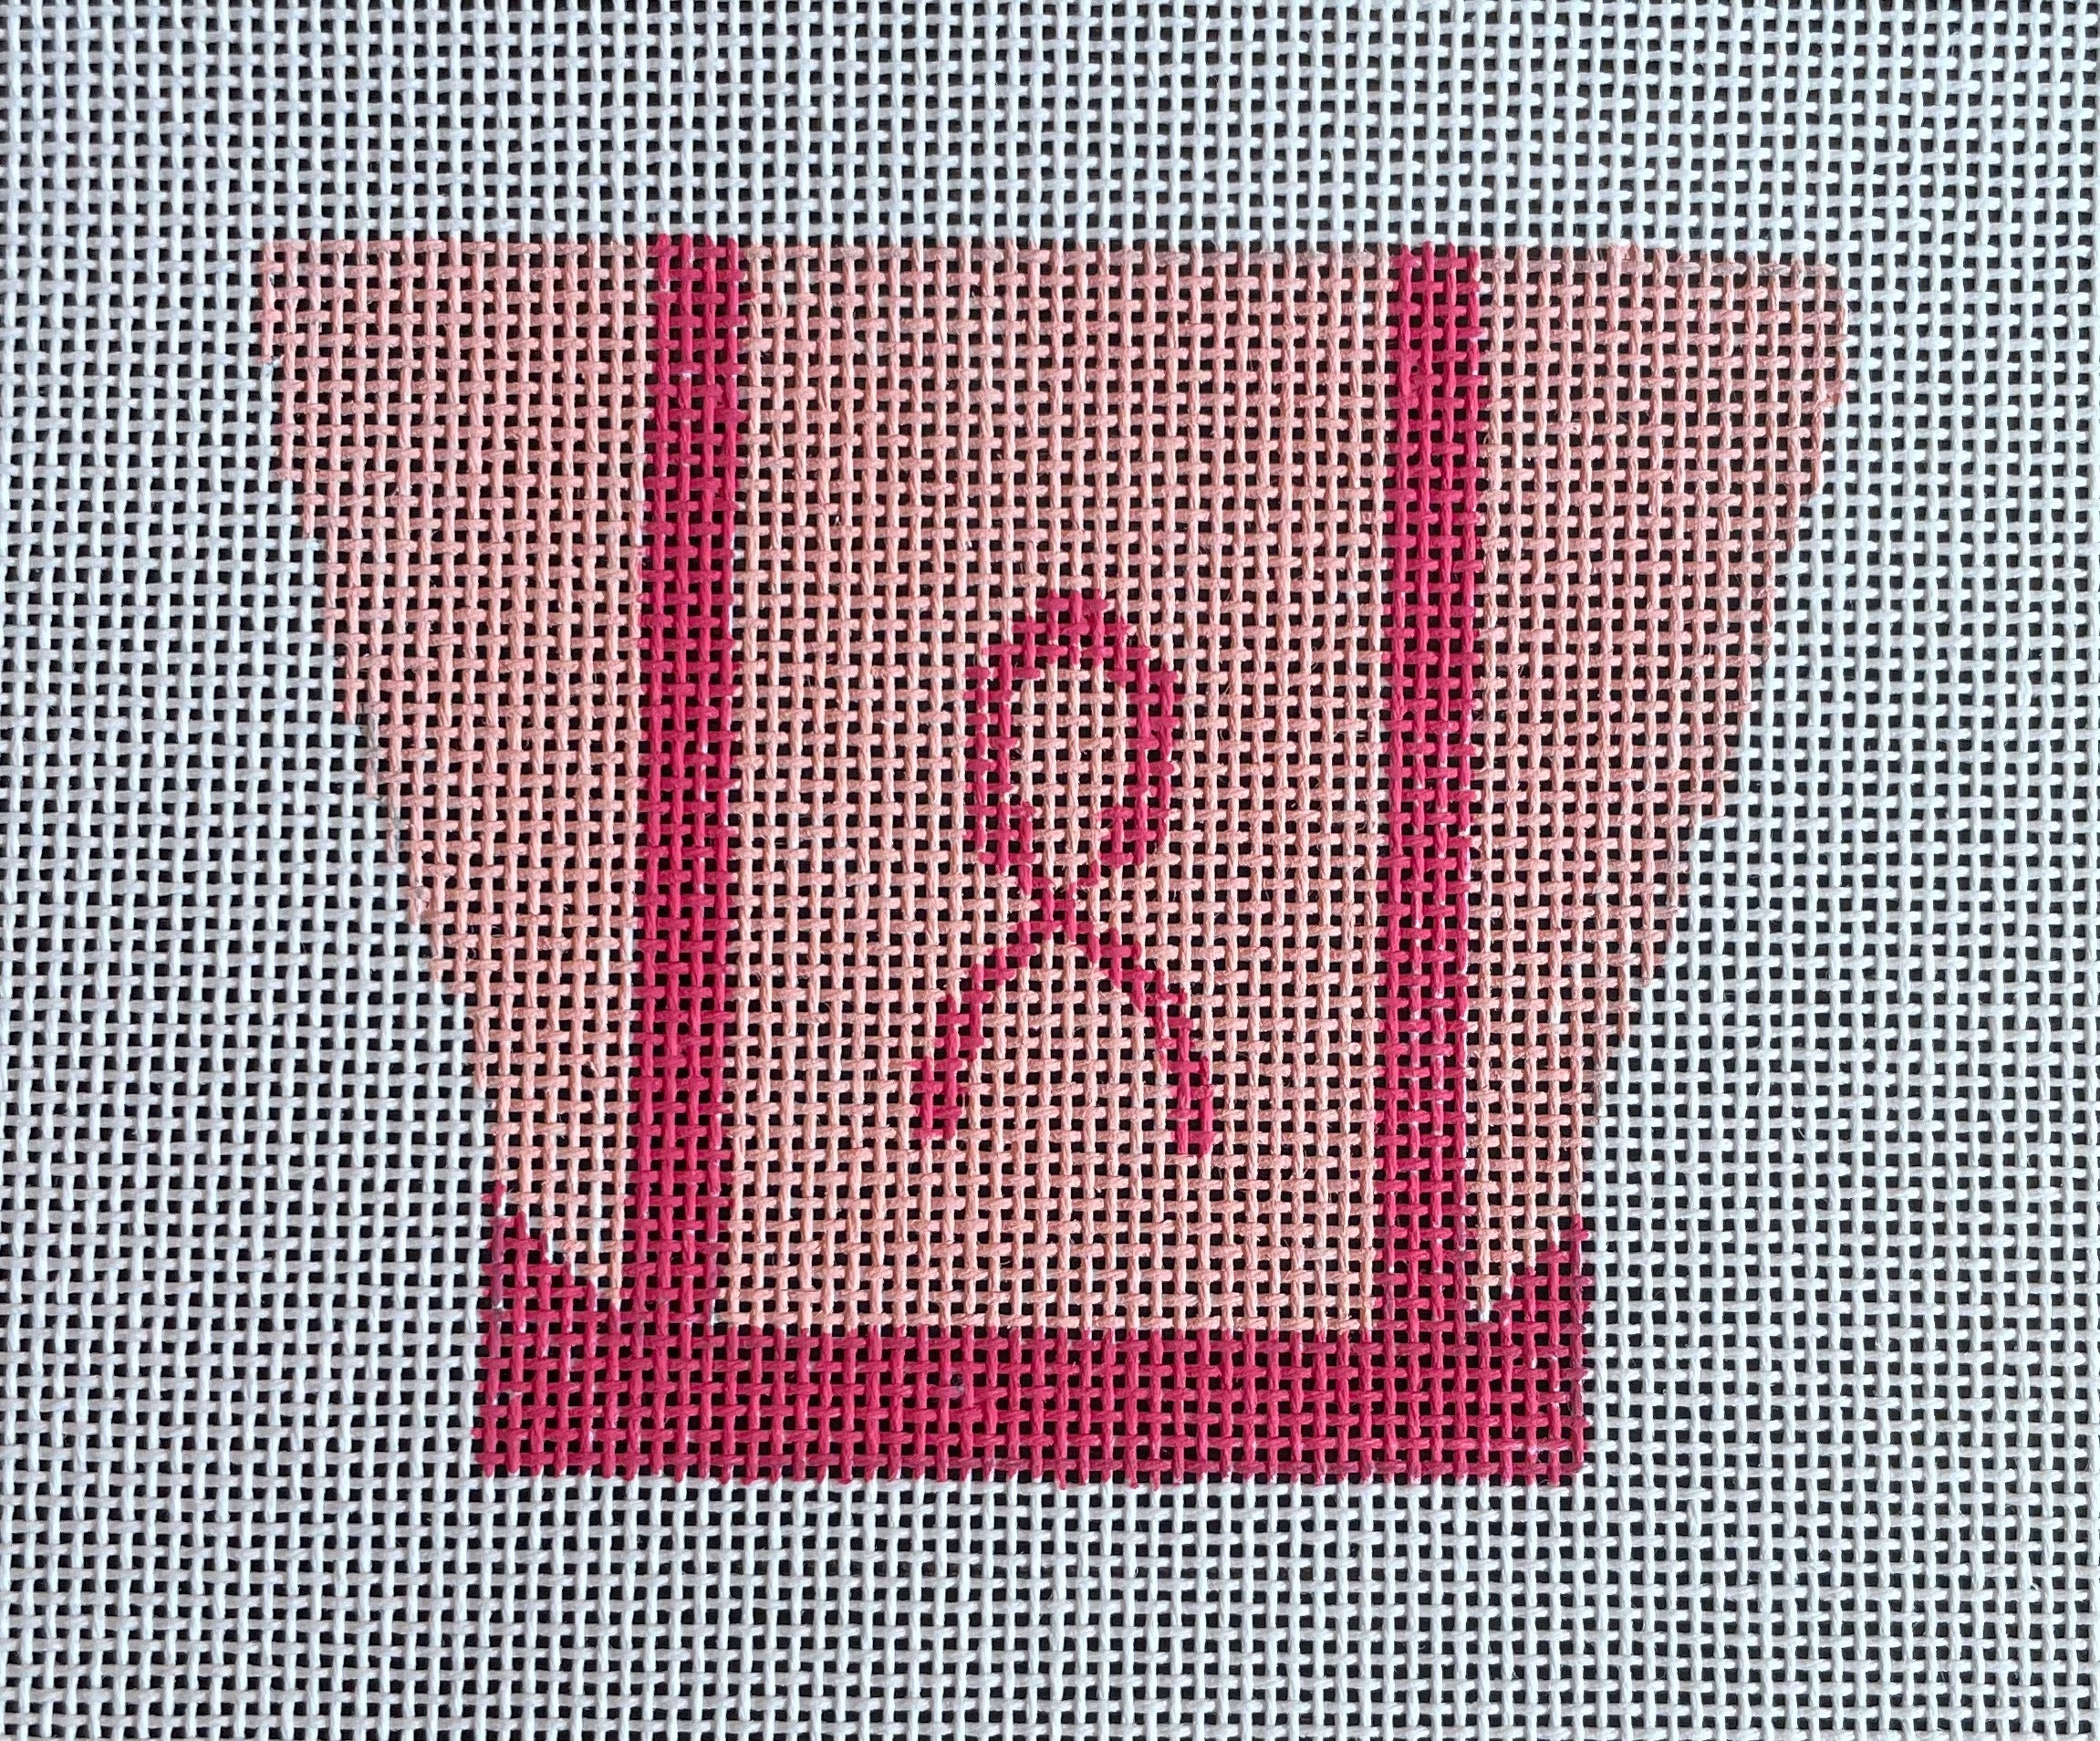 T-16 - Breast Cancer Awareness Tote Bag